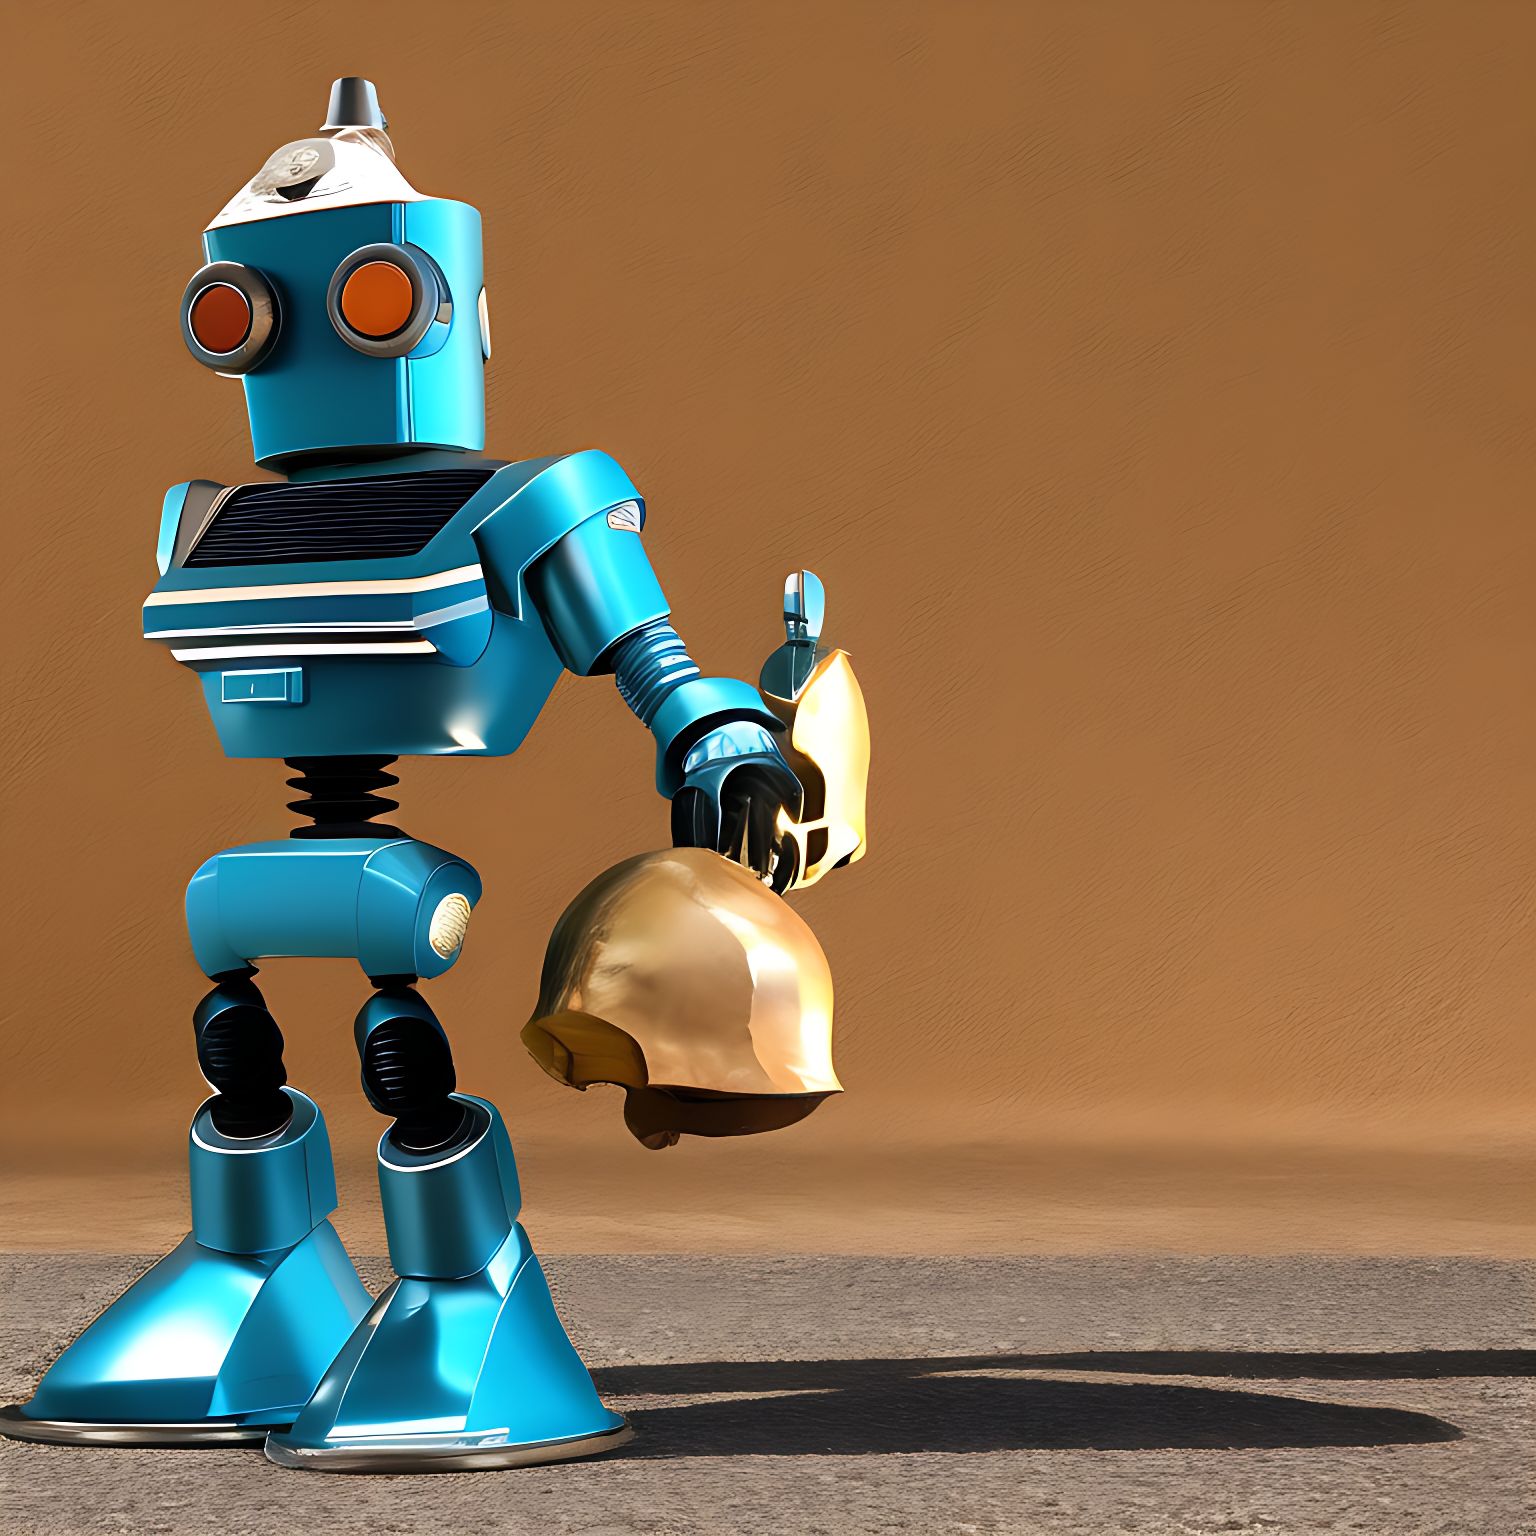 idle-locust558: Futurama robot Bender holds human skull hand